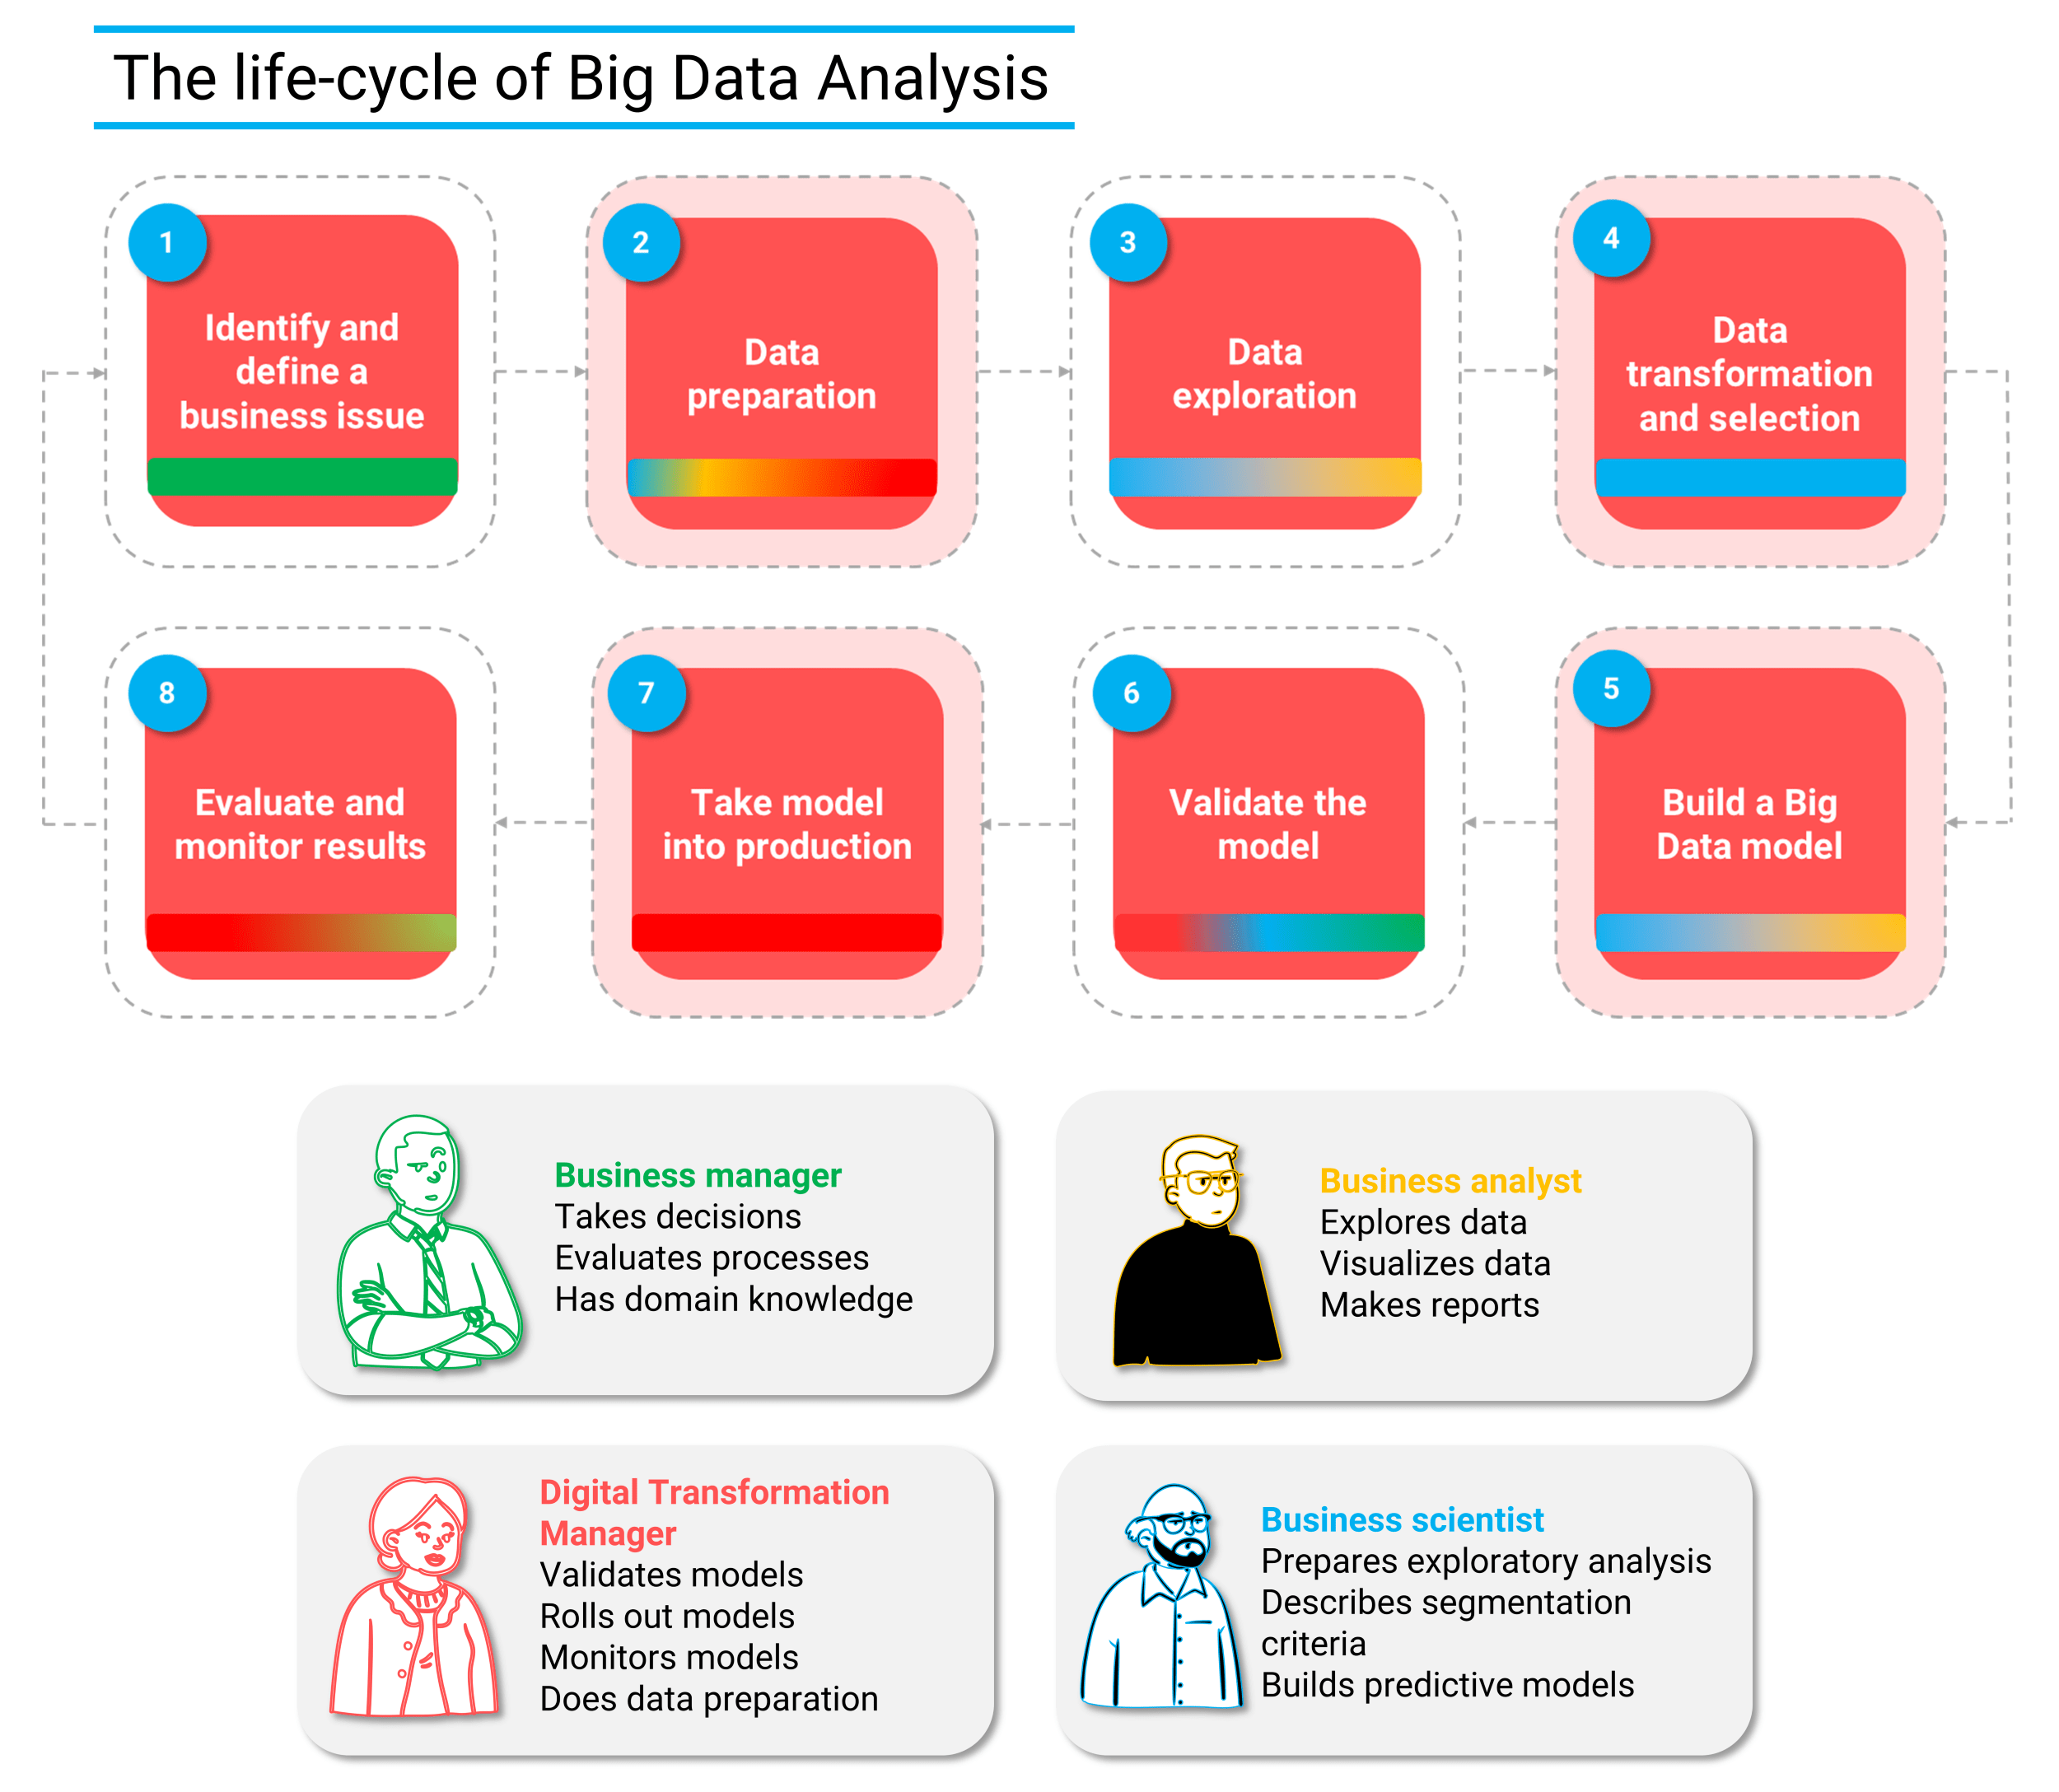 The life cycle of Big Data Analysis